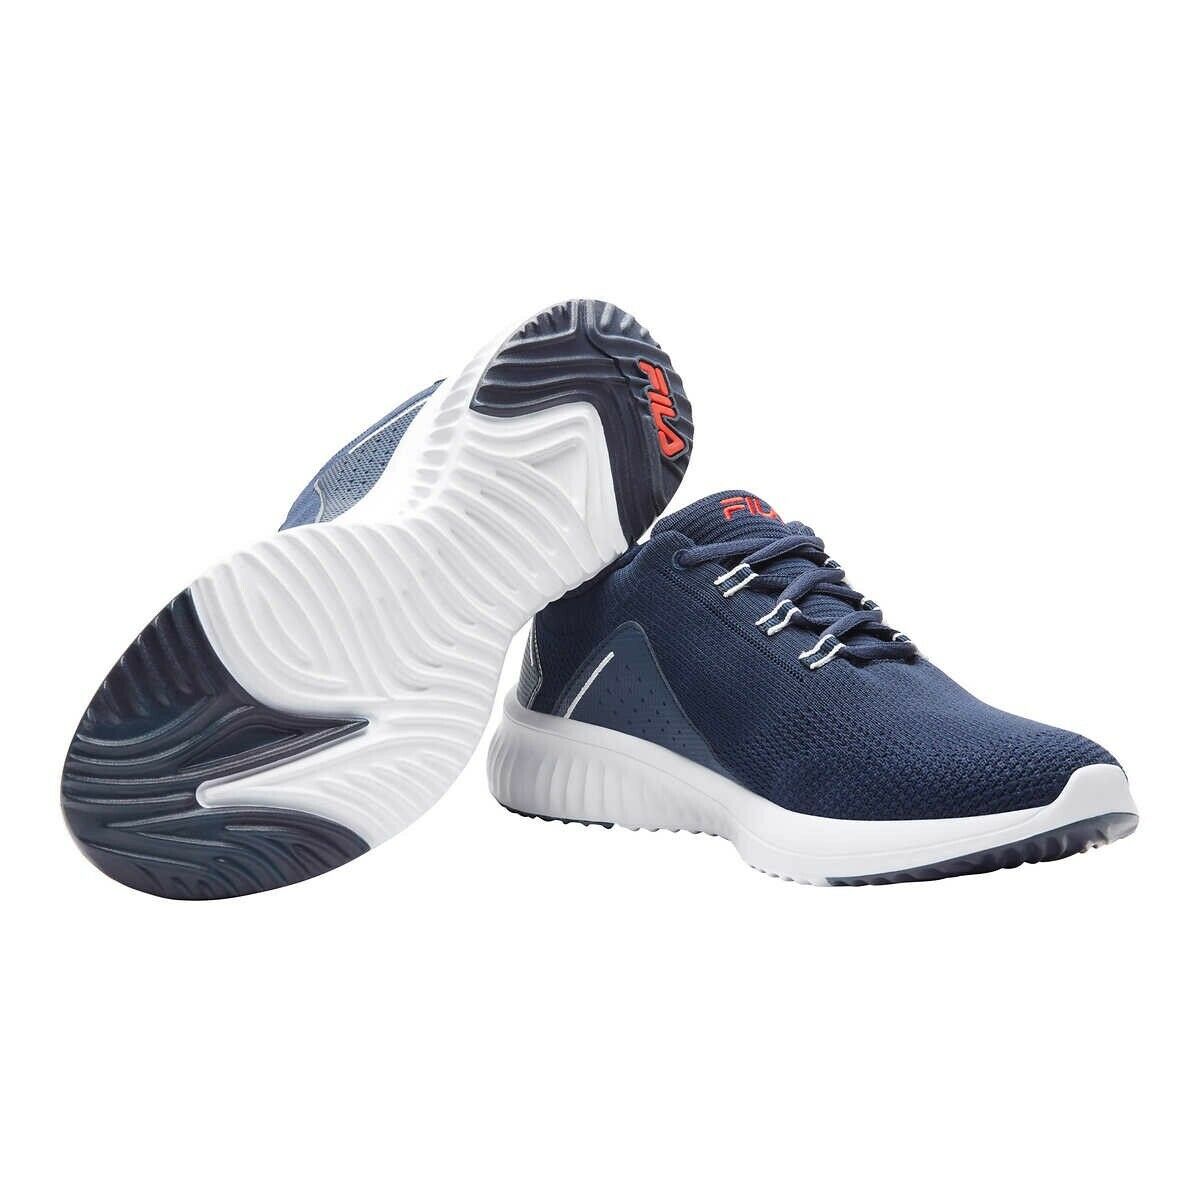 Fila Men's Athletic Running Tennis Shoes / Sneakers - Grey or Navy | eBay